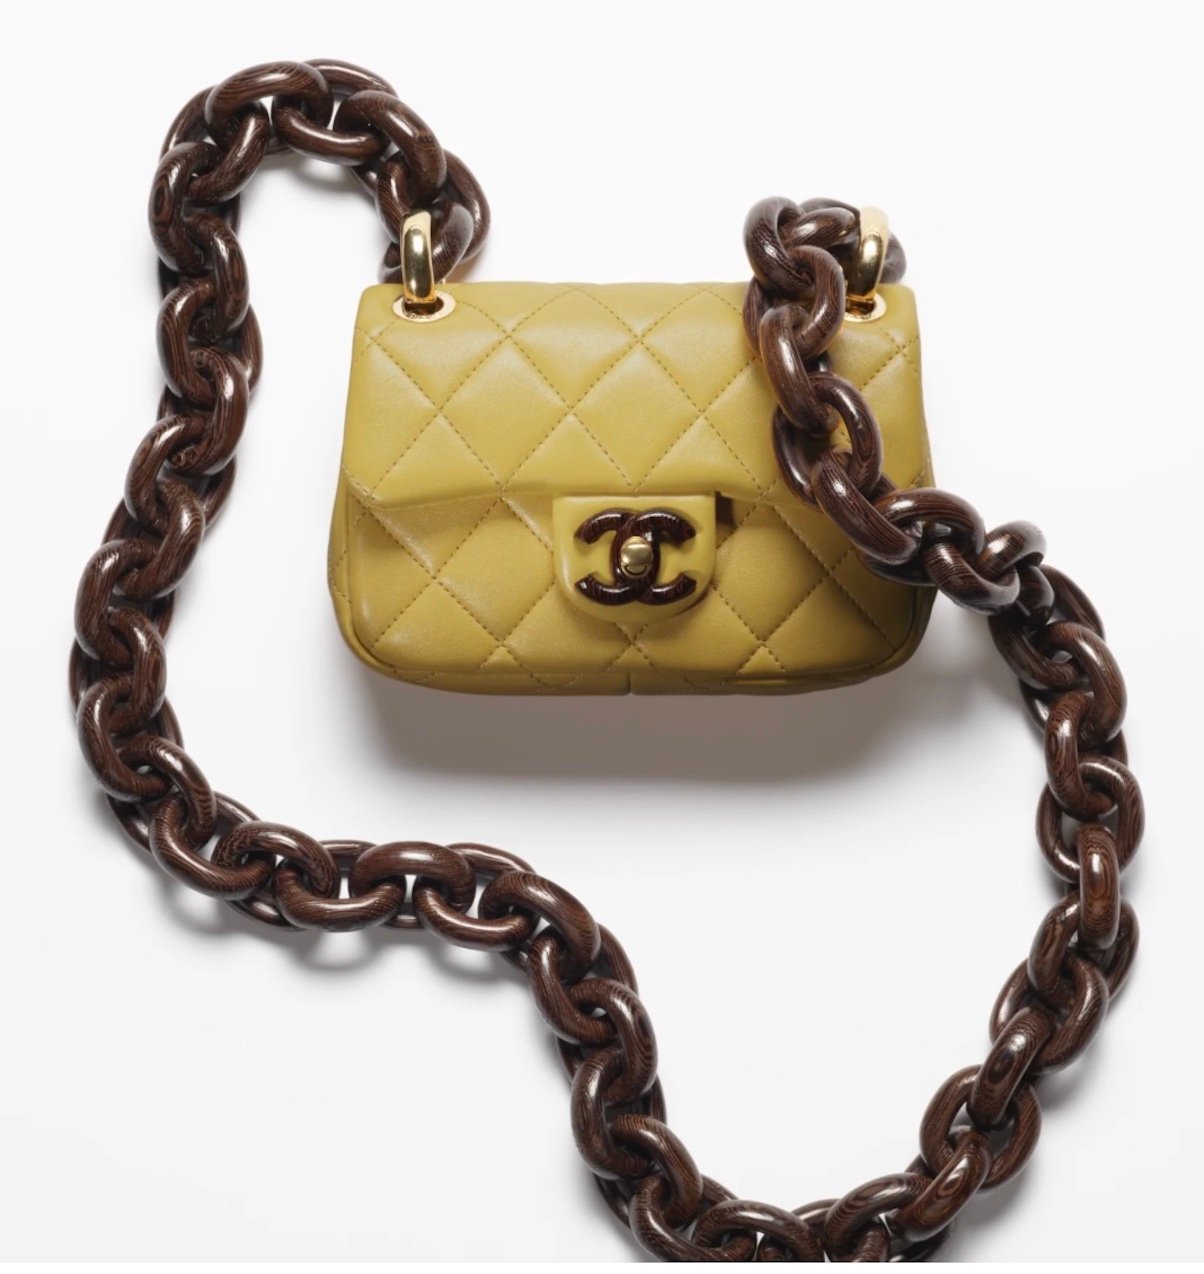 Chanel Beige Quilted Lambskin Belt Bag Micro Q6A0011II8000